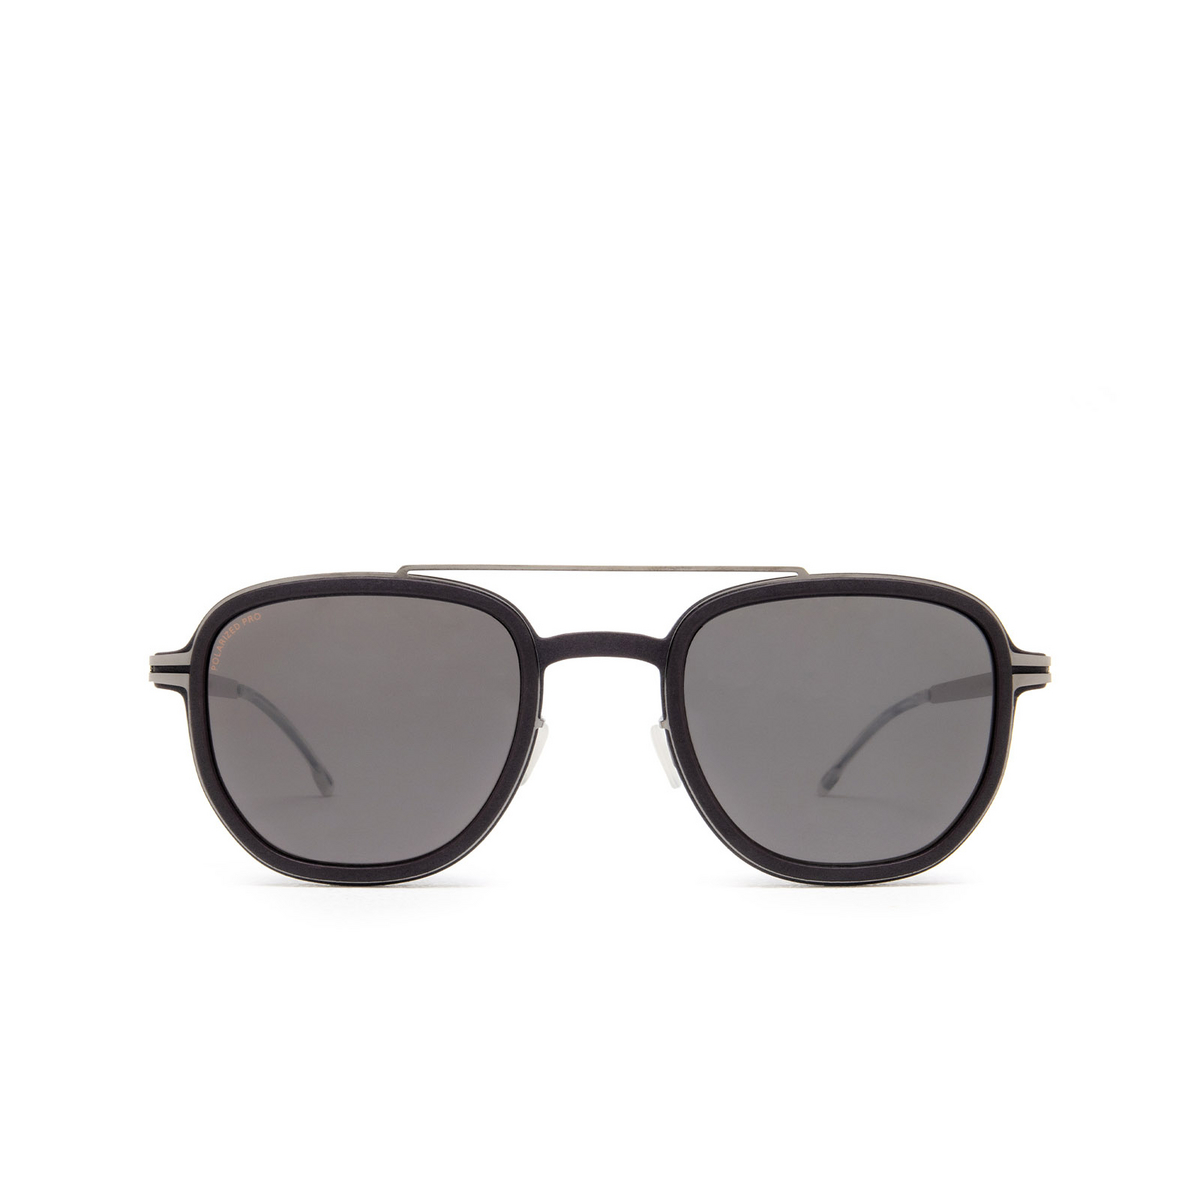 Mykita ALDER SUN Sunglasses 559 MH60 Slate Grey/Shiny Graphite - front view